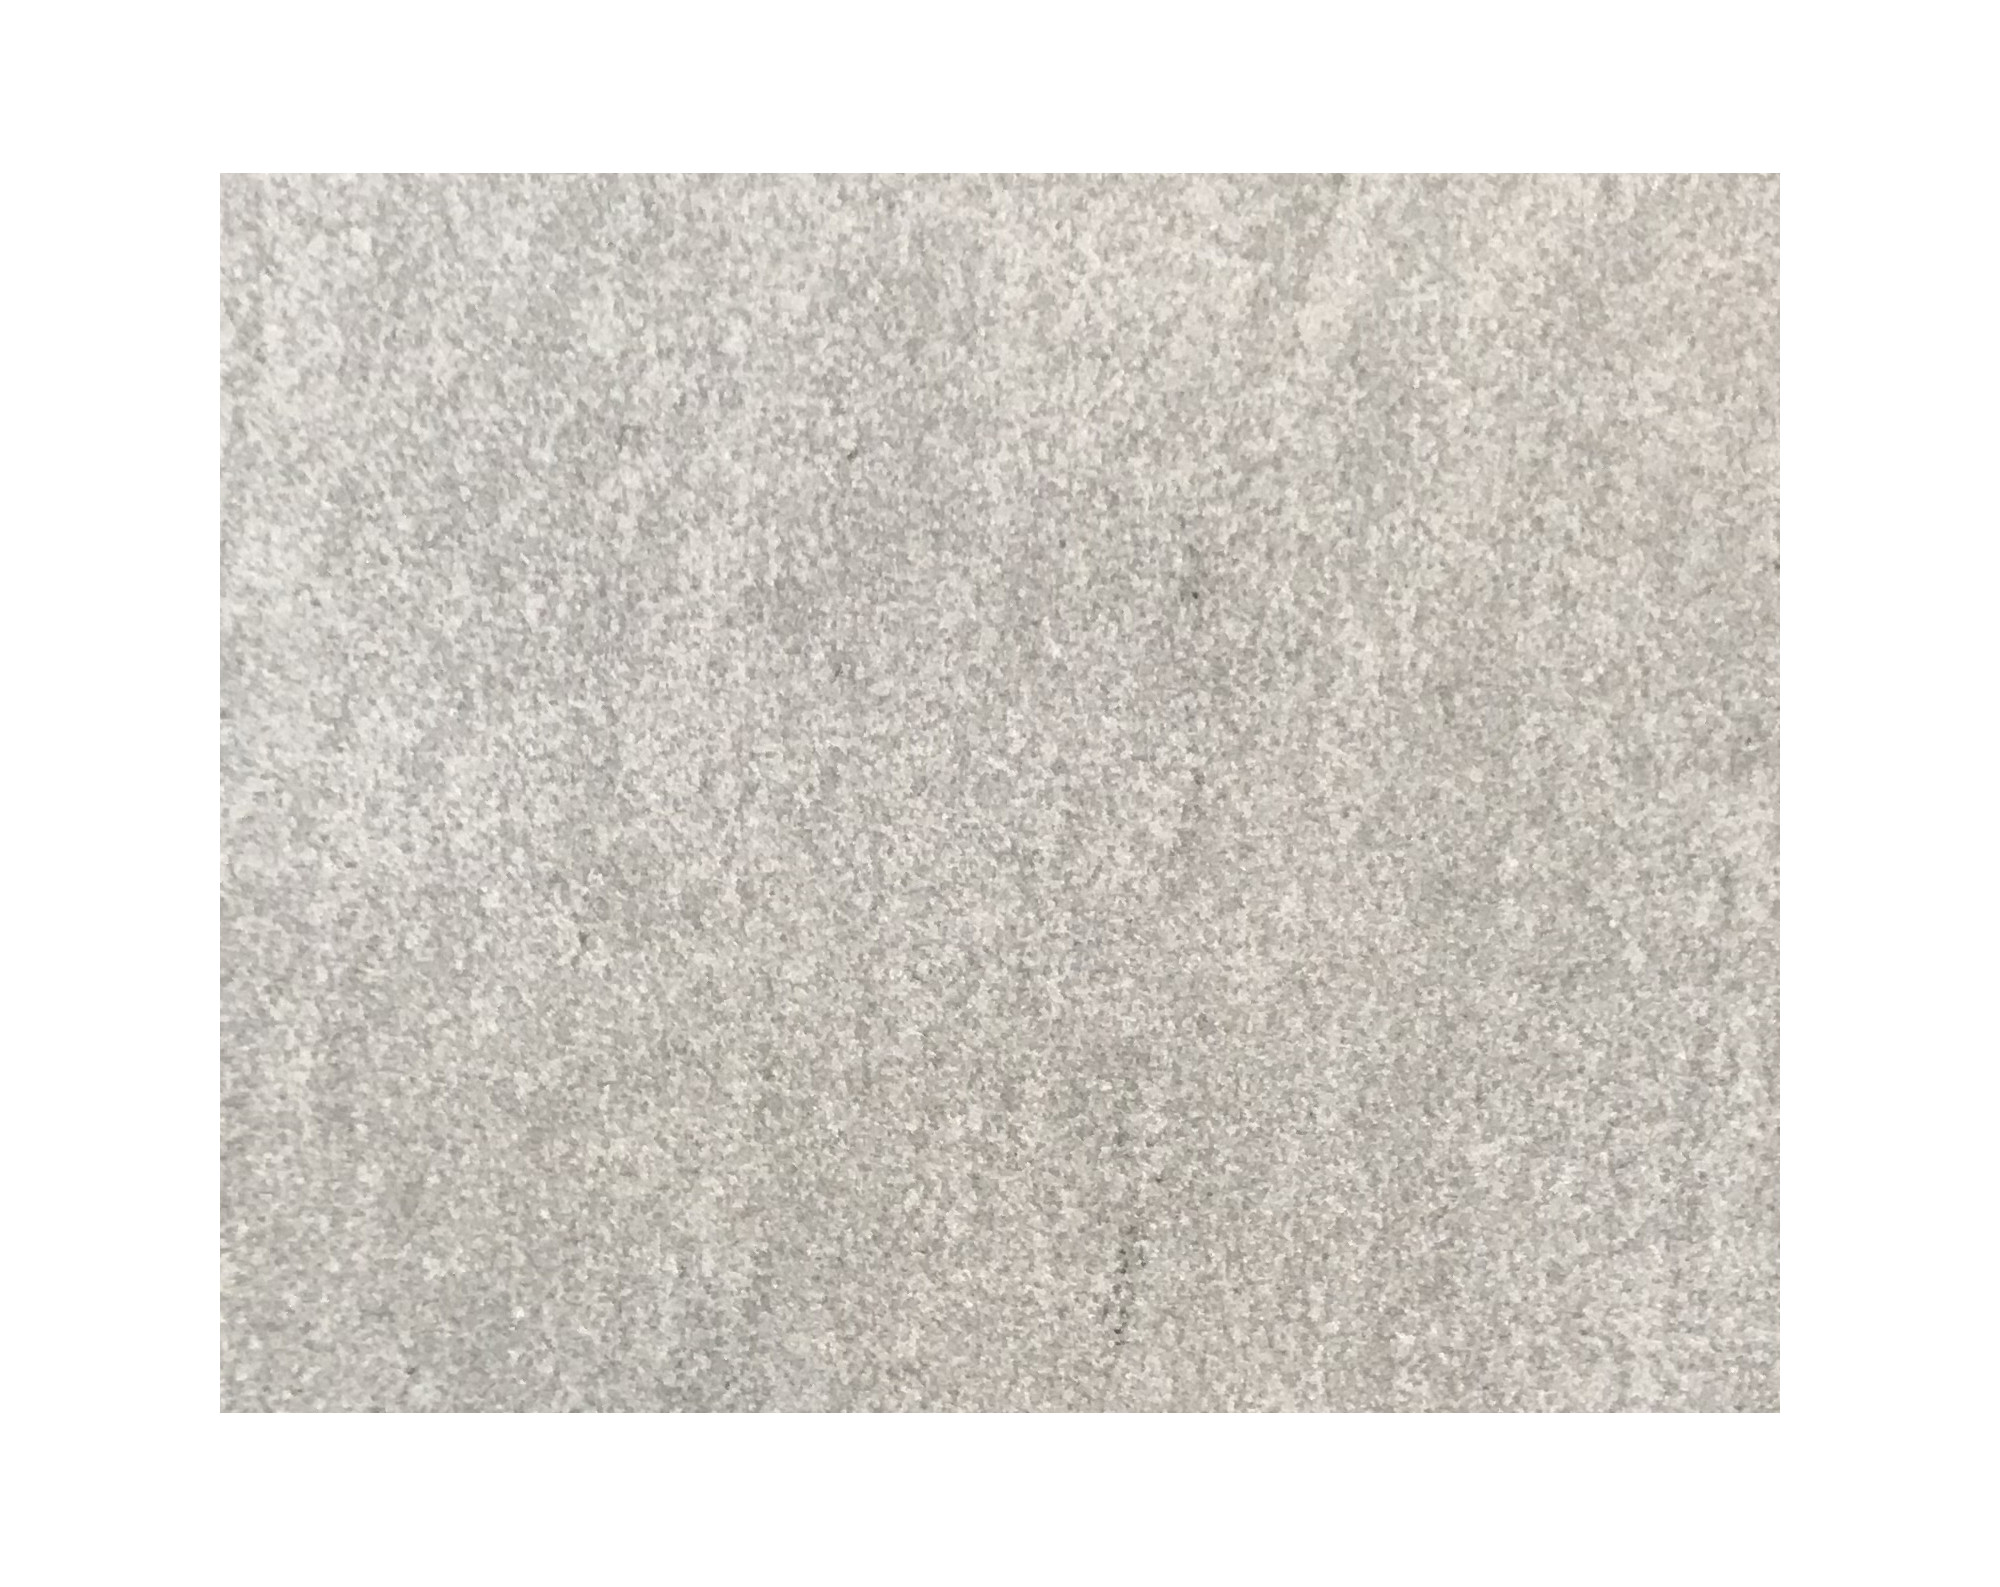 Harmo roc maranelloset, keramiek-serie, ovaal d: 6,00mx11,30m, zand grijs, keramisch porselein